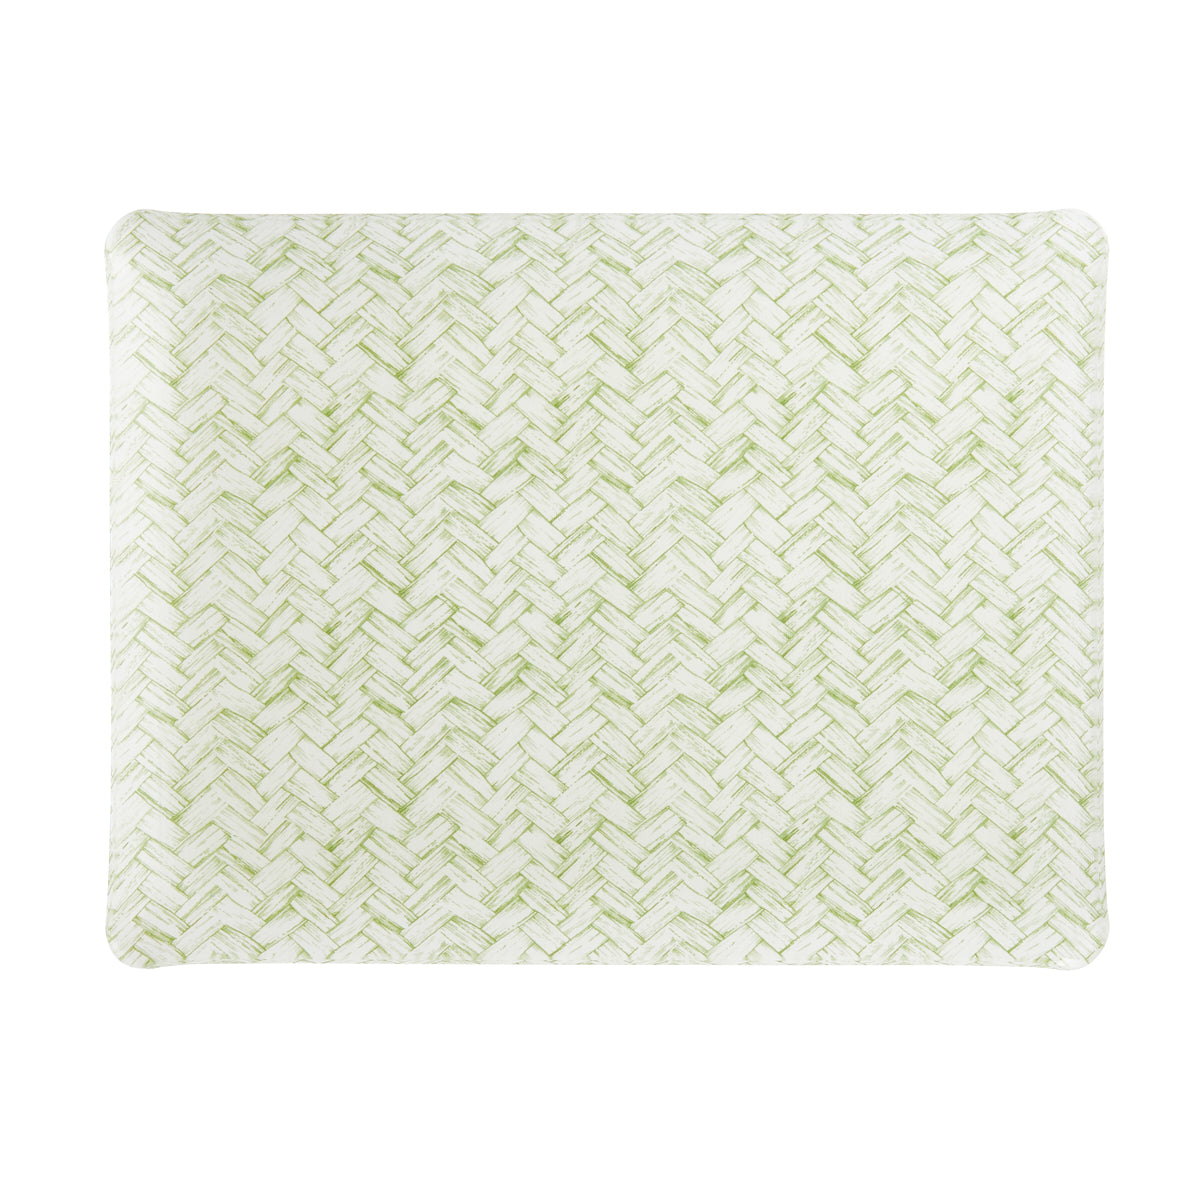 Fabric Tray Medium 37X28 - Green Basketweave